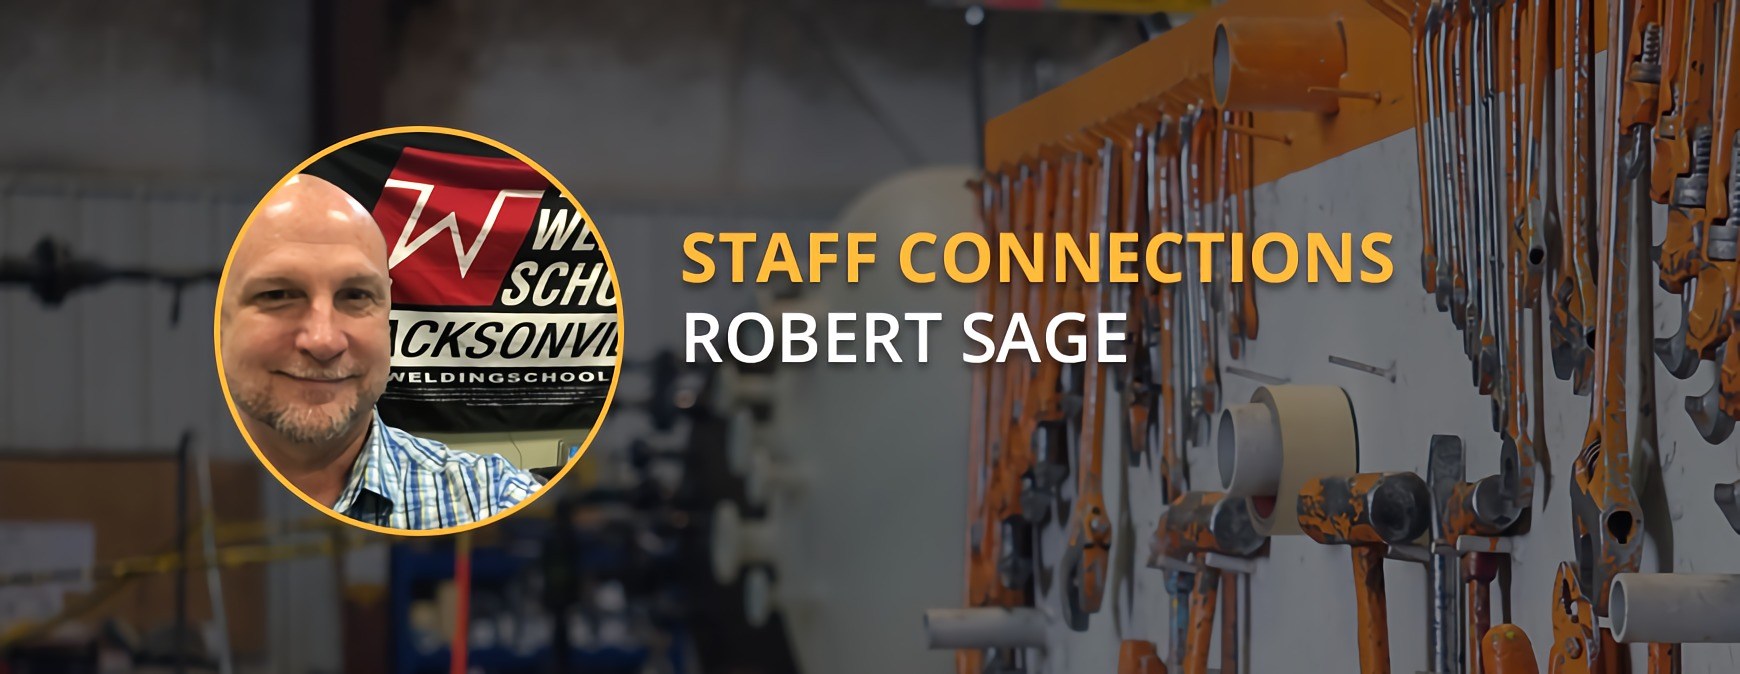 robert sage staff connection